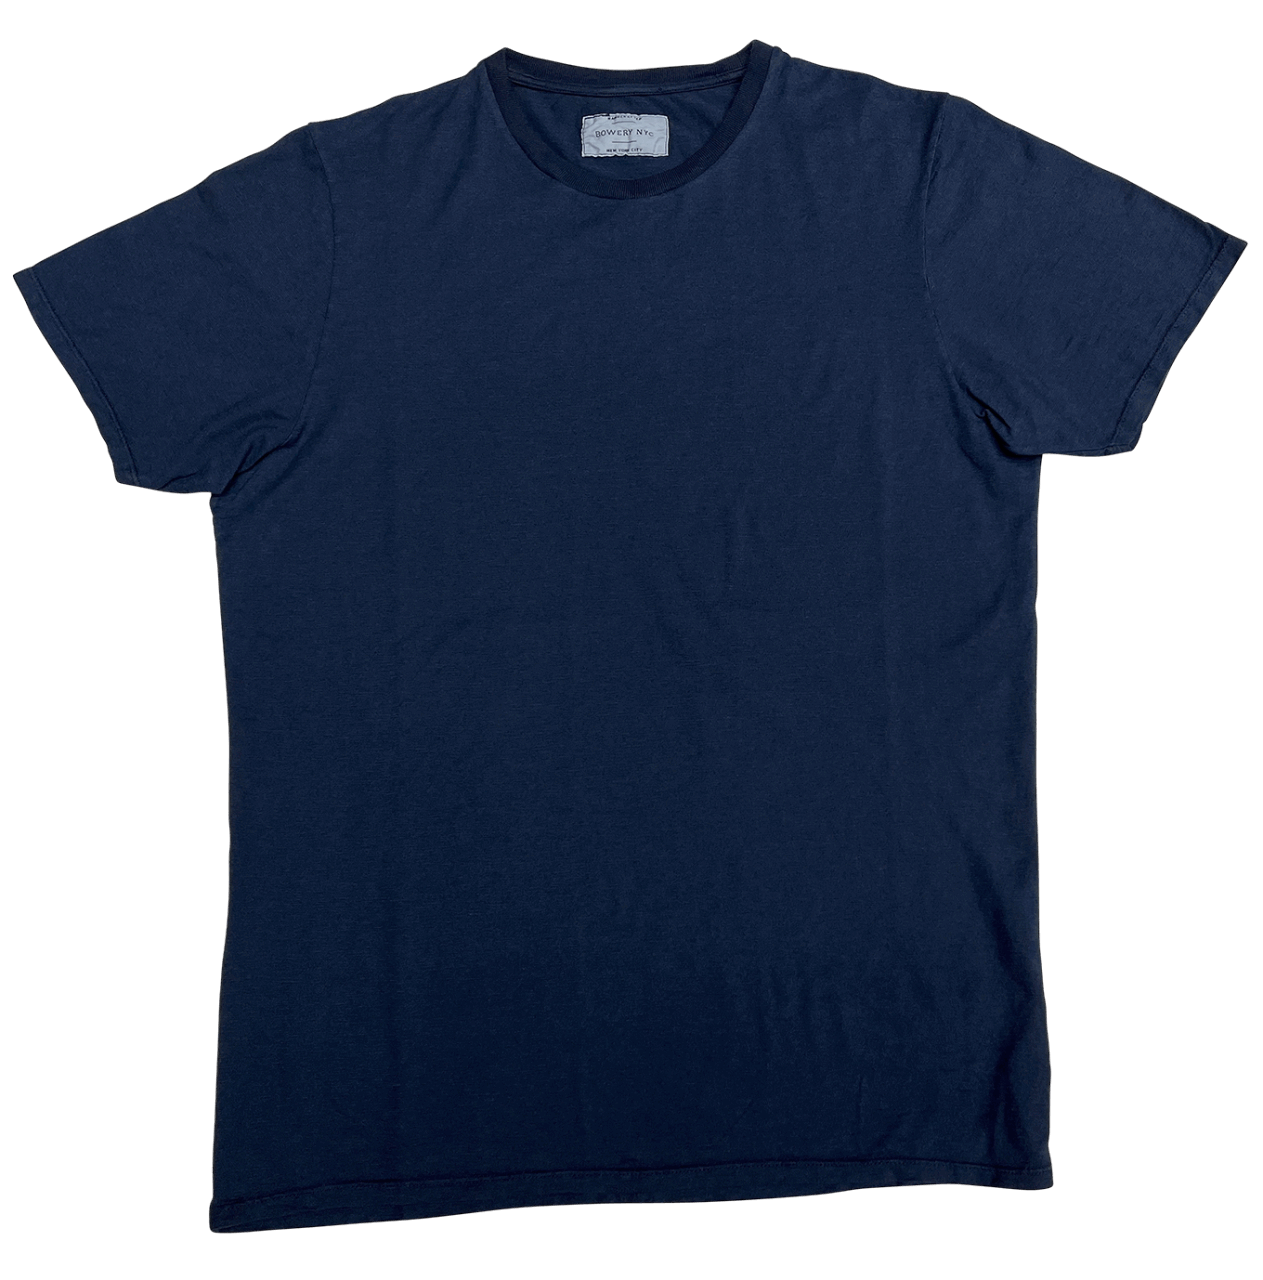 Bowery NYC - Crewneck t-shirt - gibraltar blue